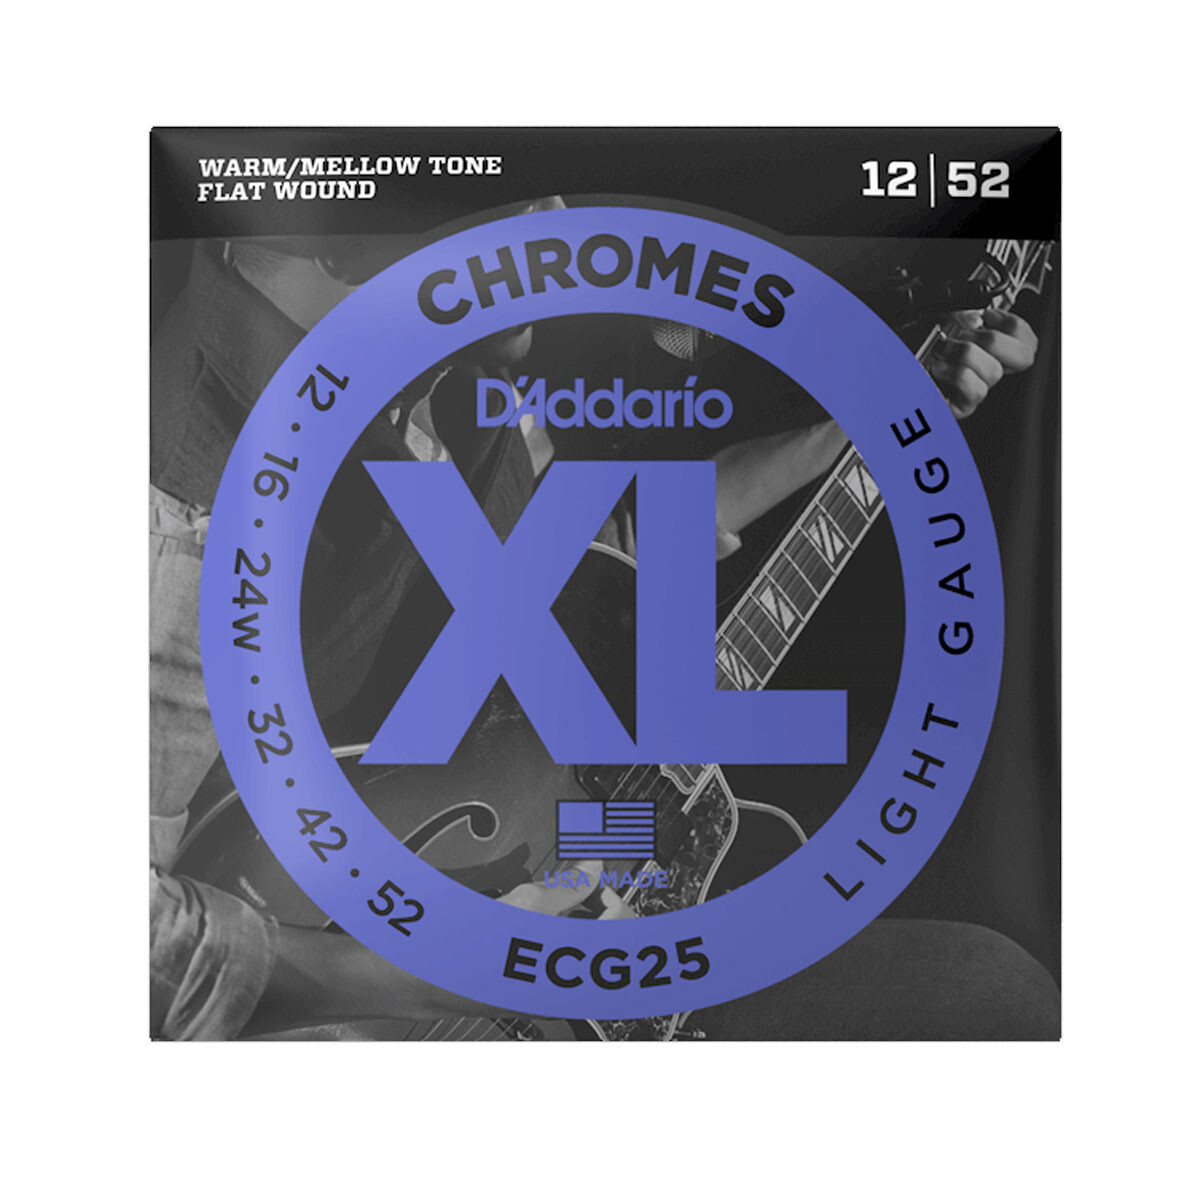 Encordado Electrica Daddario Ecg25 Chrome 12-52 